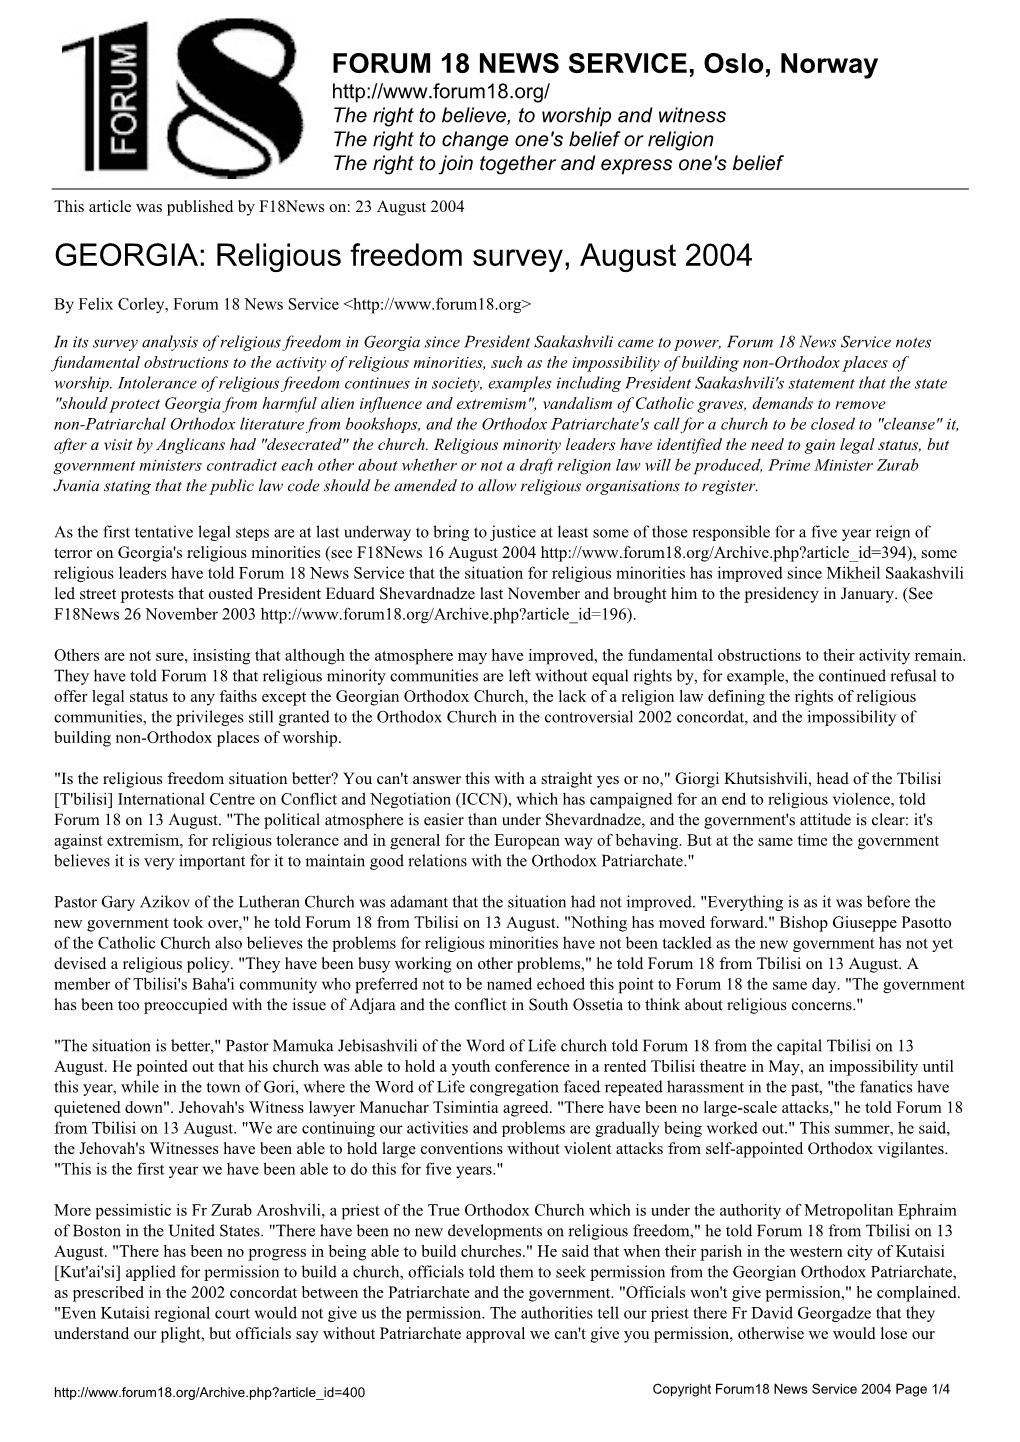 Religious Freedom Survey, August 2004